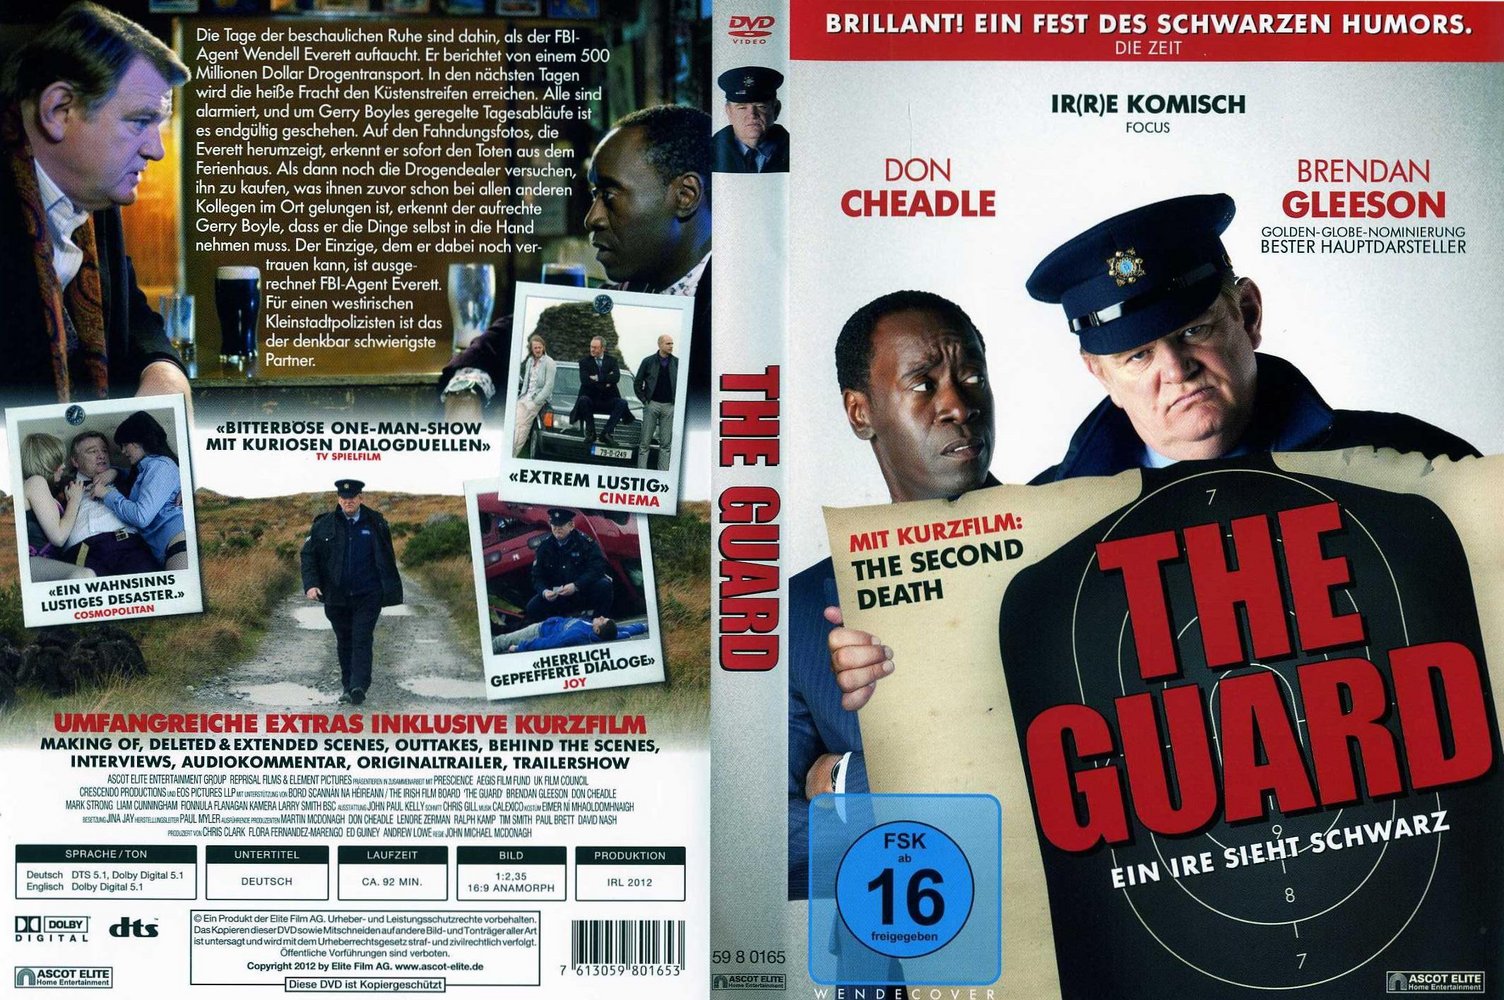 https://gfx.videobuster.de/archive/v/cYWi_Hd9G5qTPAft5VjzVwAcz0lMkawqCUyRjAzJTJGaW1hmSUyRmpwZWclMkbOY2ZhZjJjZLPvYTDxZq5mZjBiZPQyY6xmLmpwZyZyPWimMDA/the-guard-dvd-full-cover.jpg